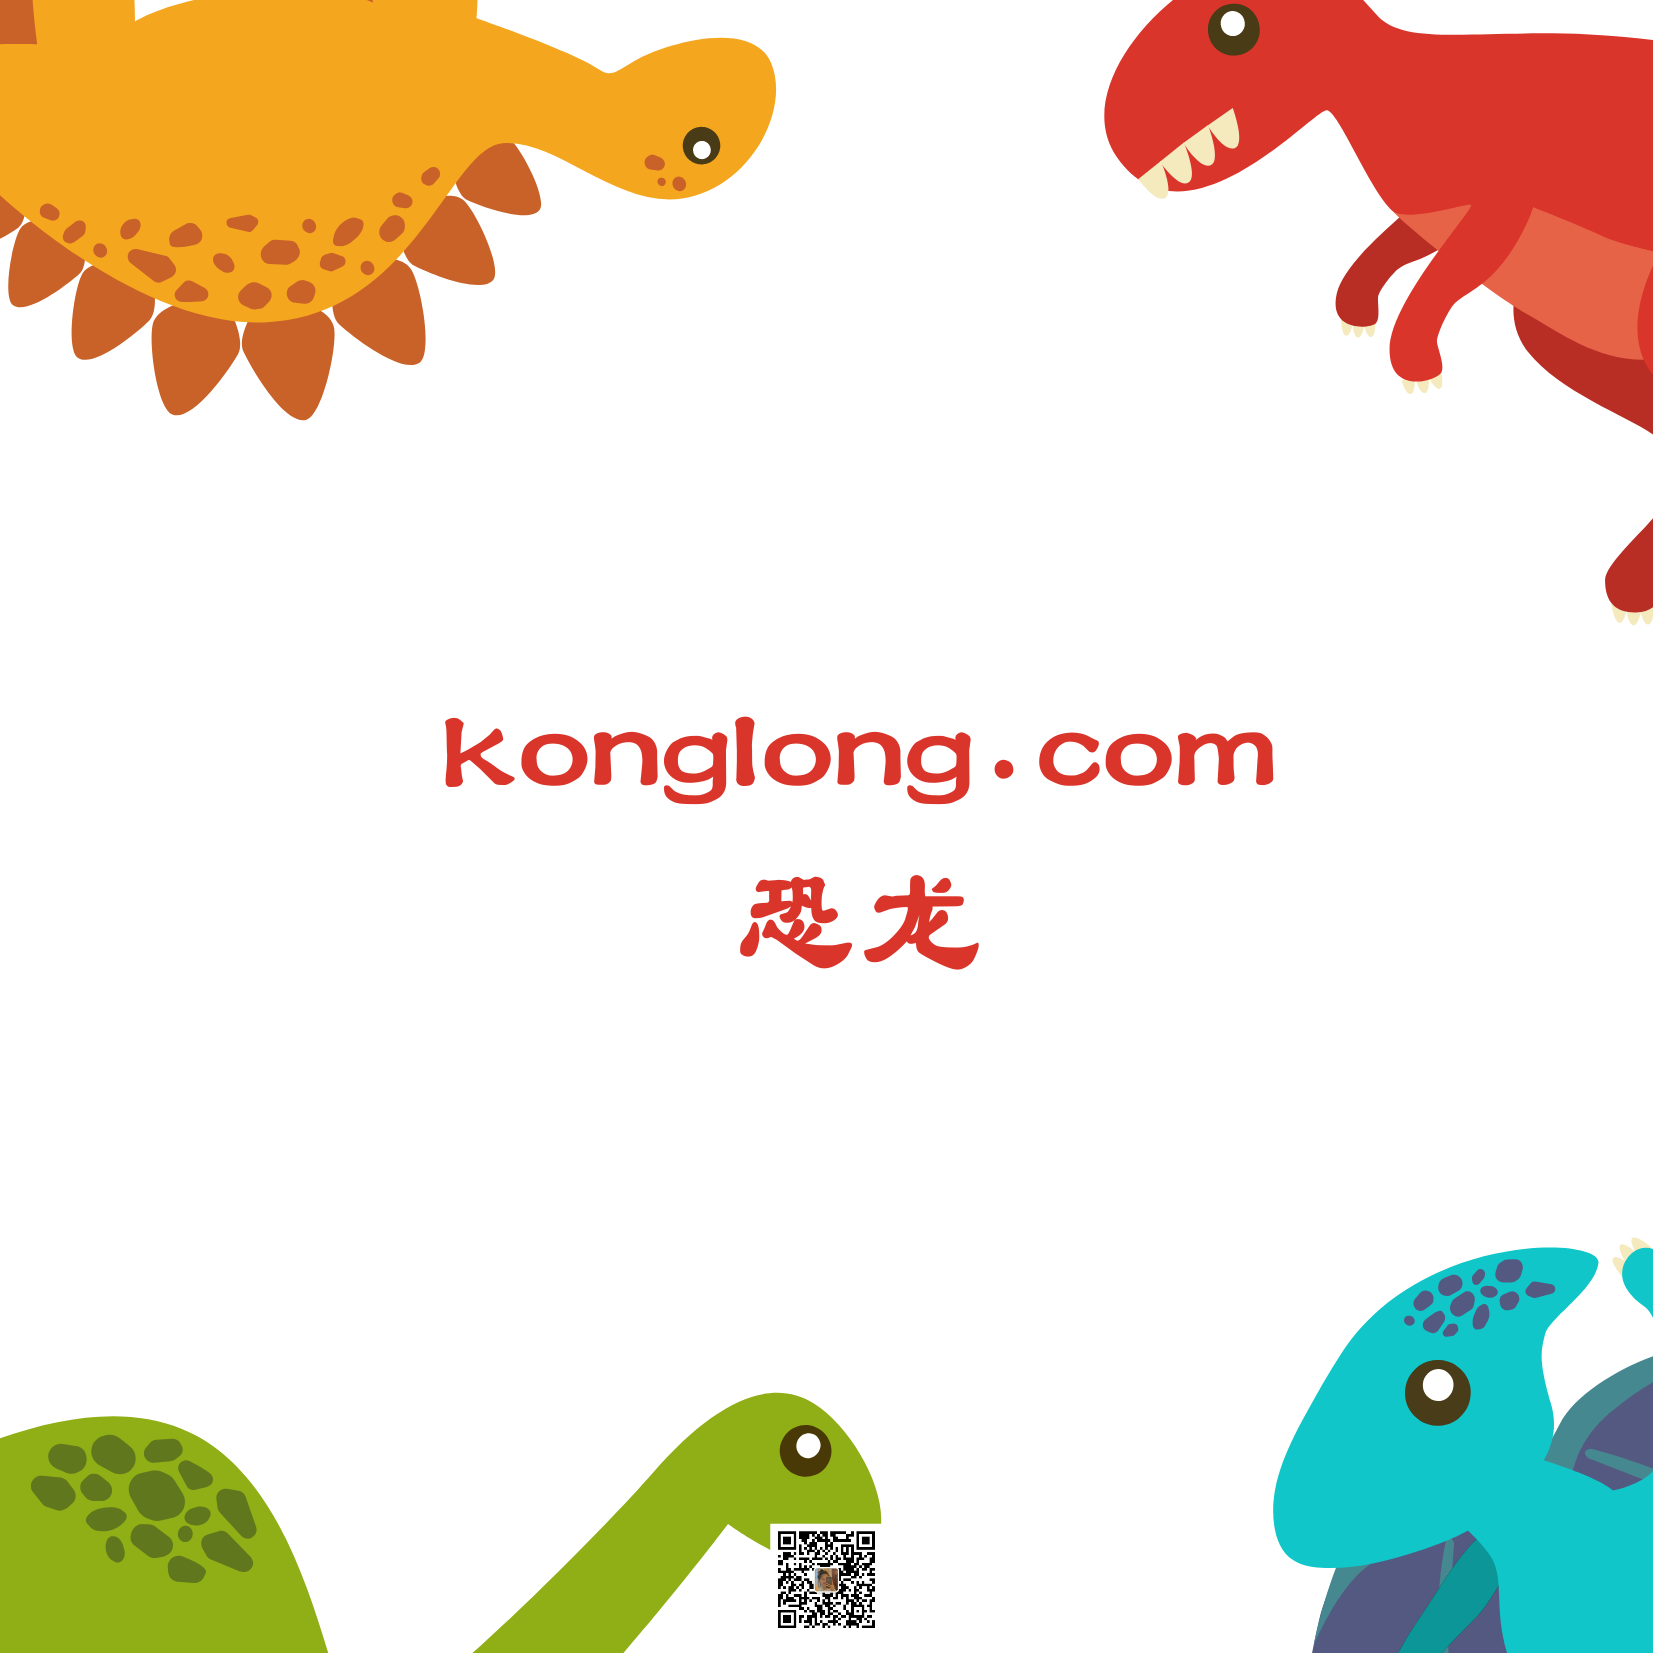 konglong.com